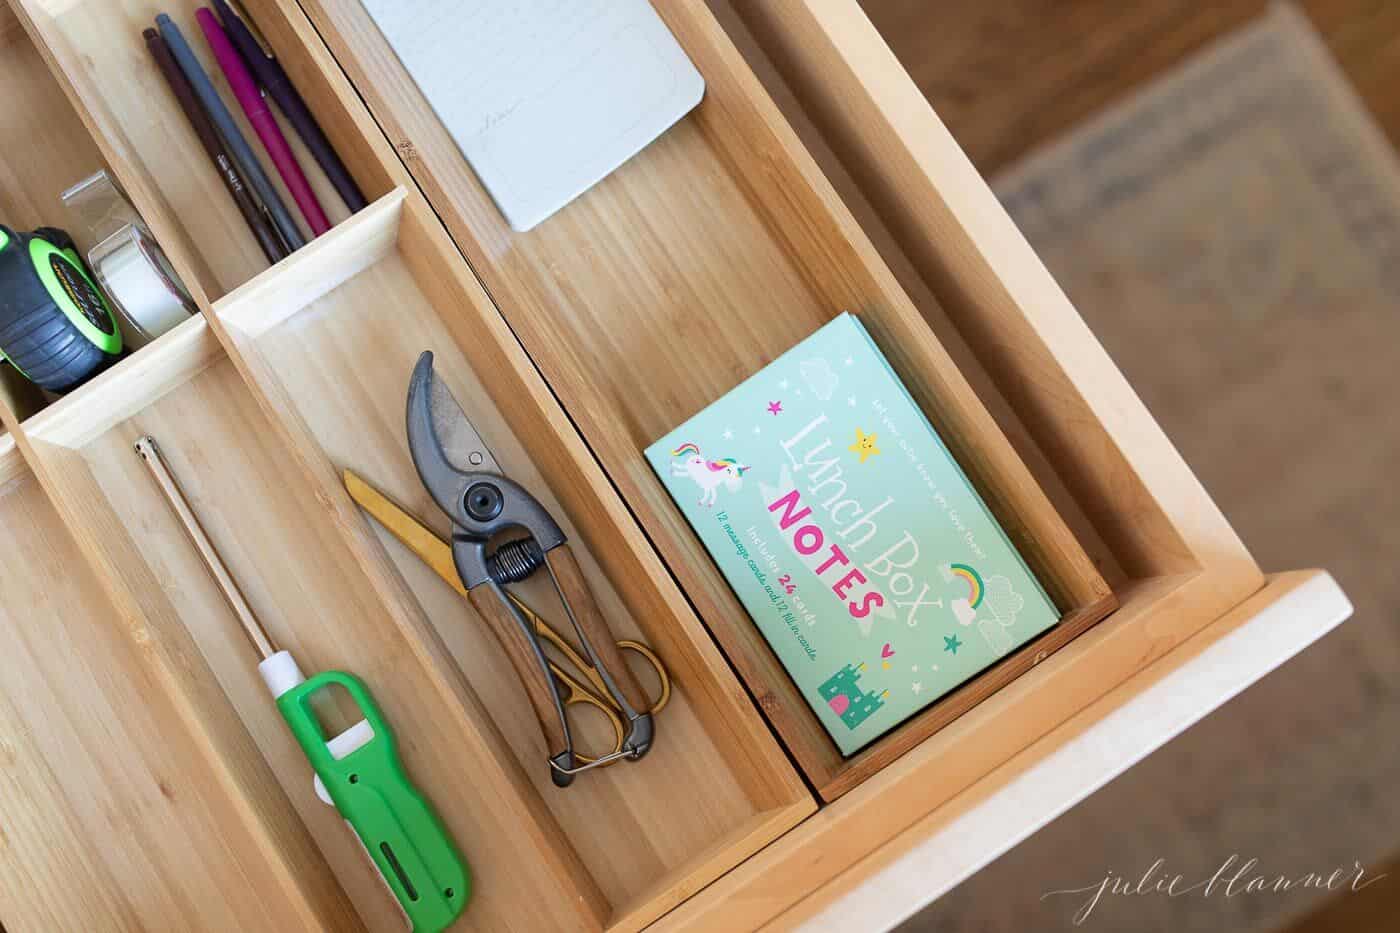 Wooden drawer inserts in a kitchen junk drawer.